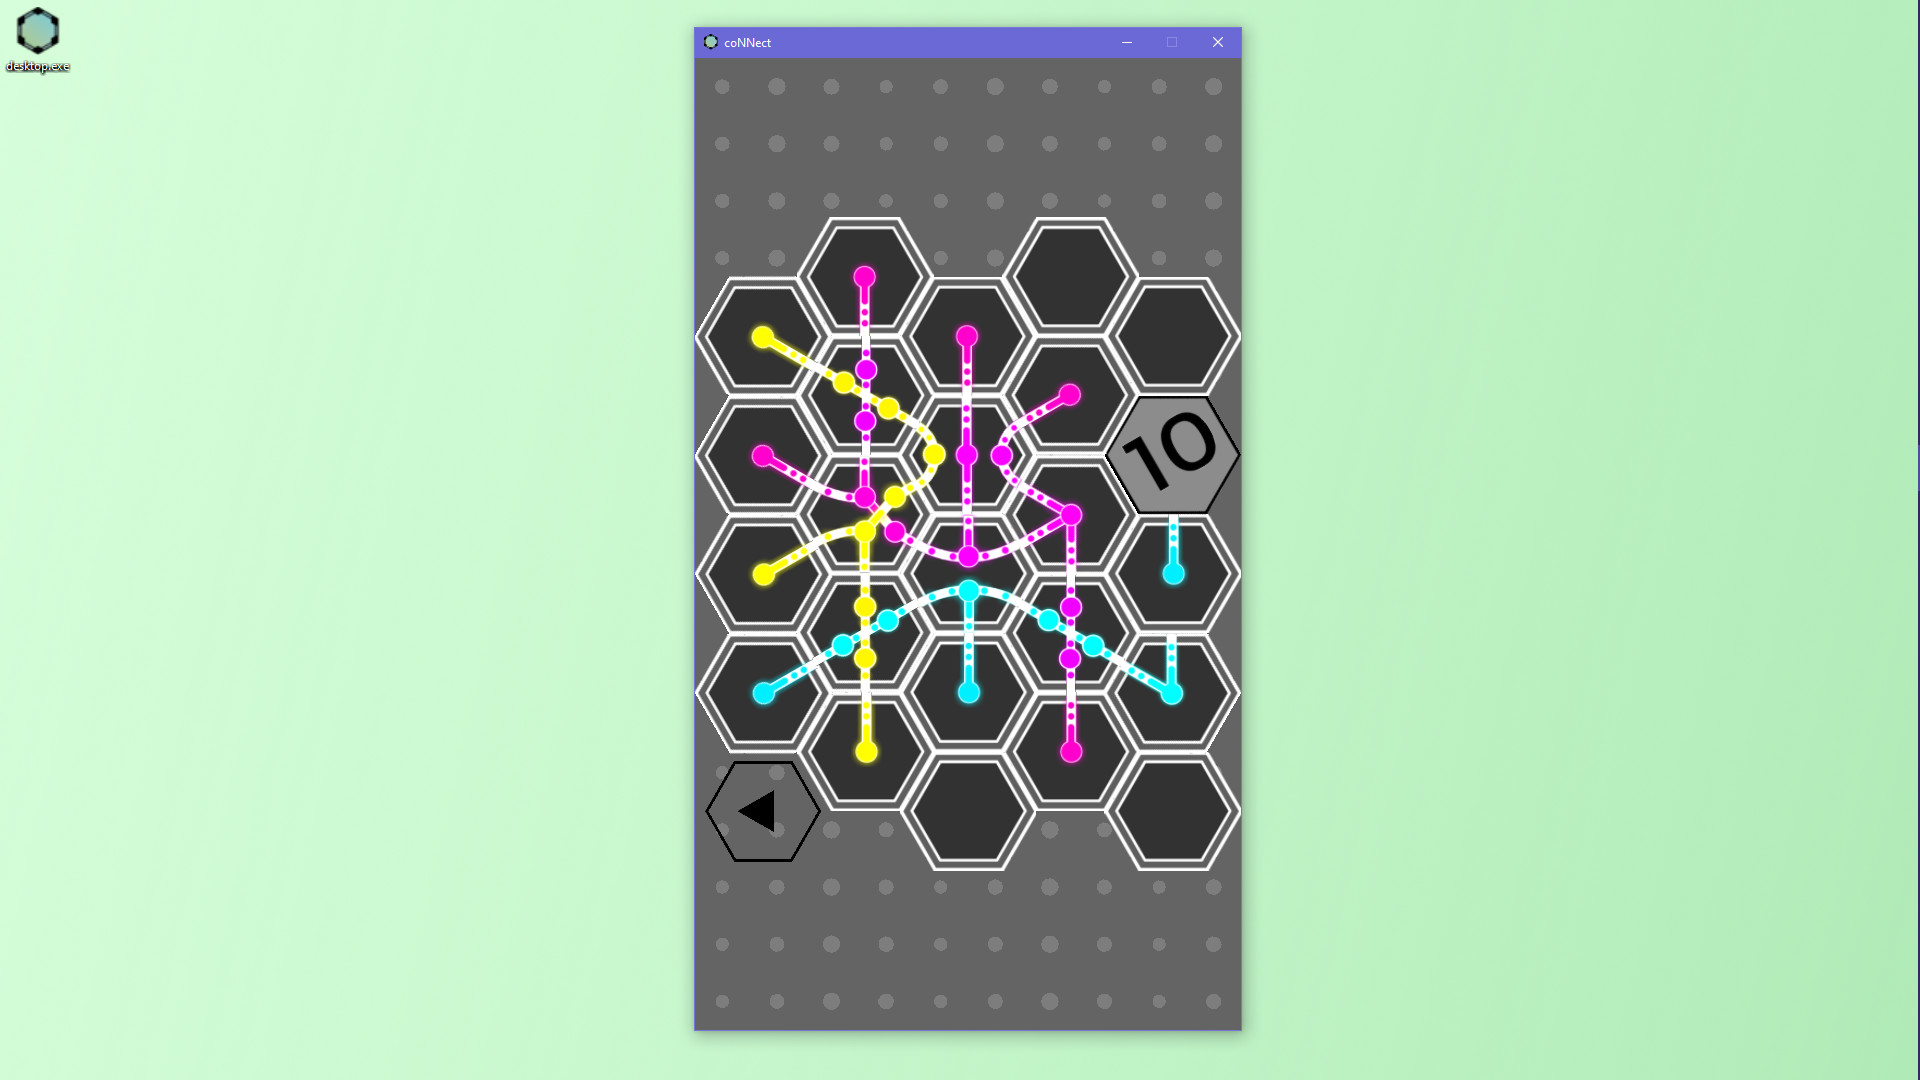 Hexagon puzzle on Steam